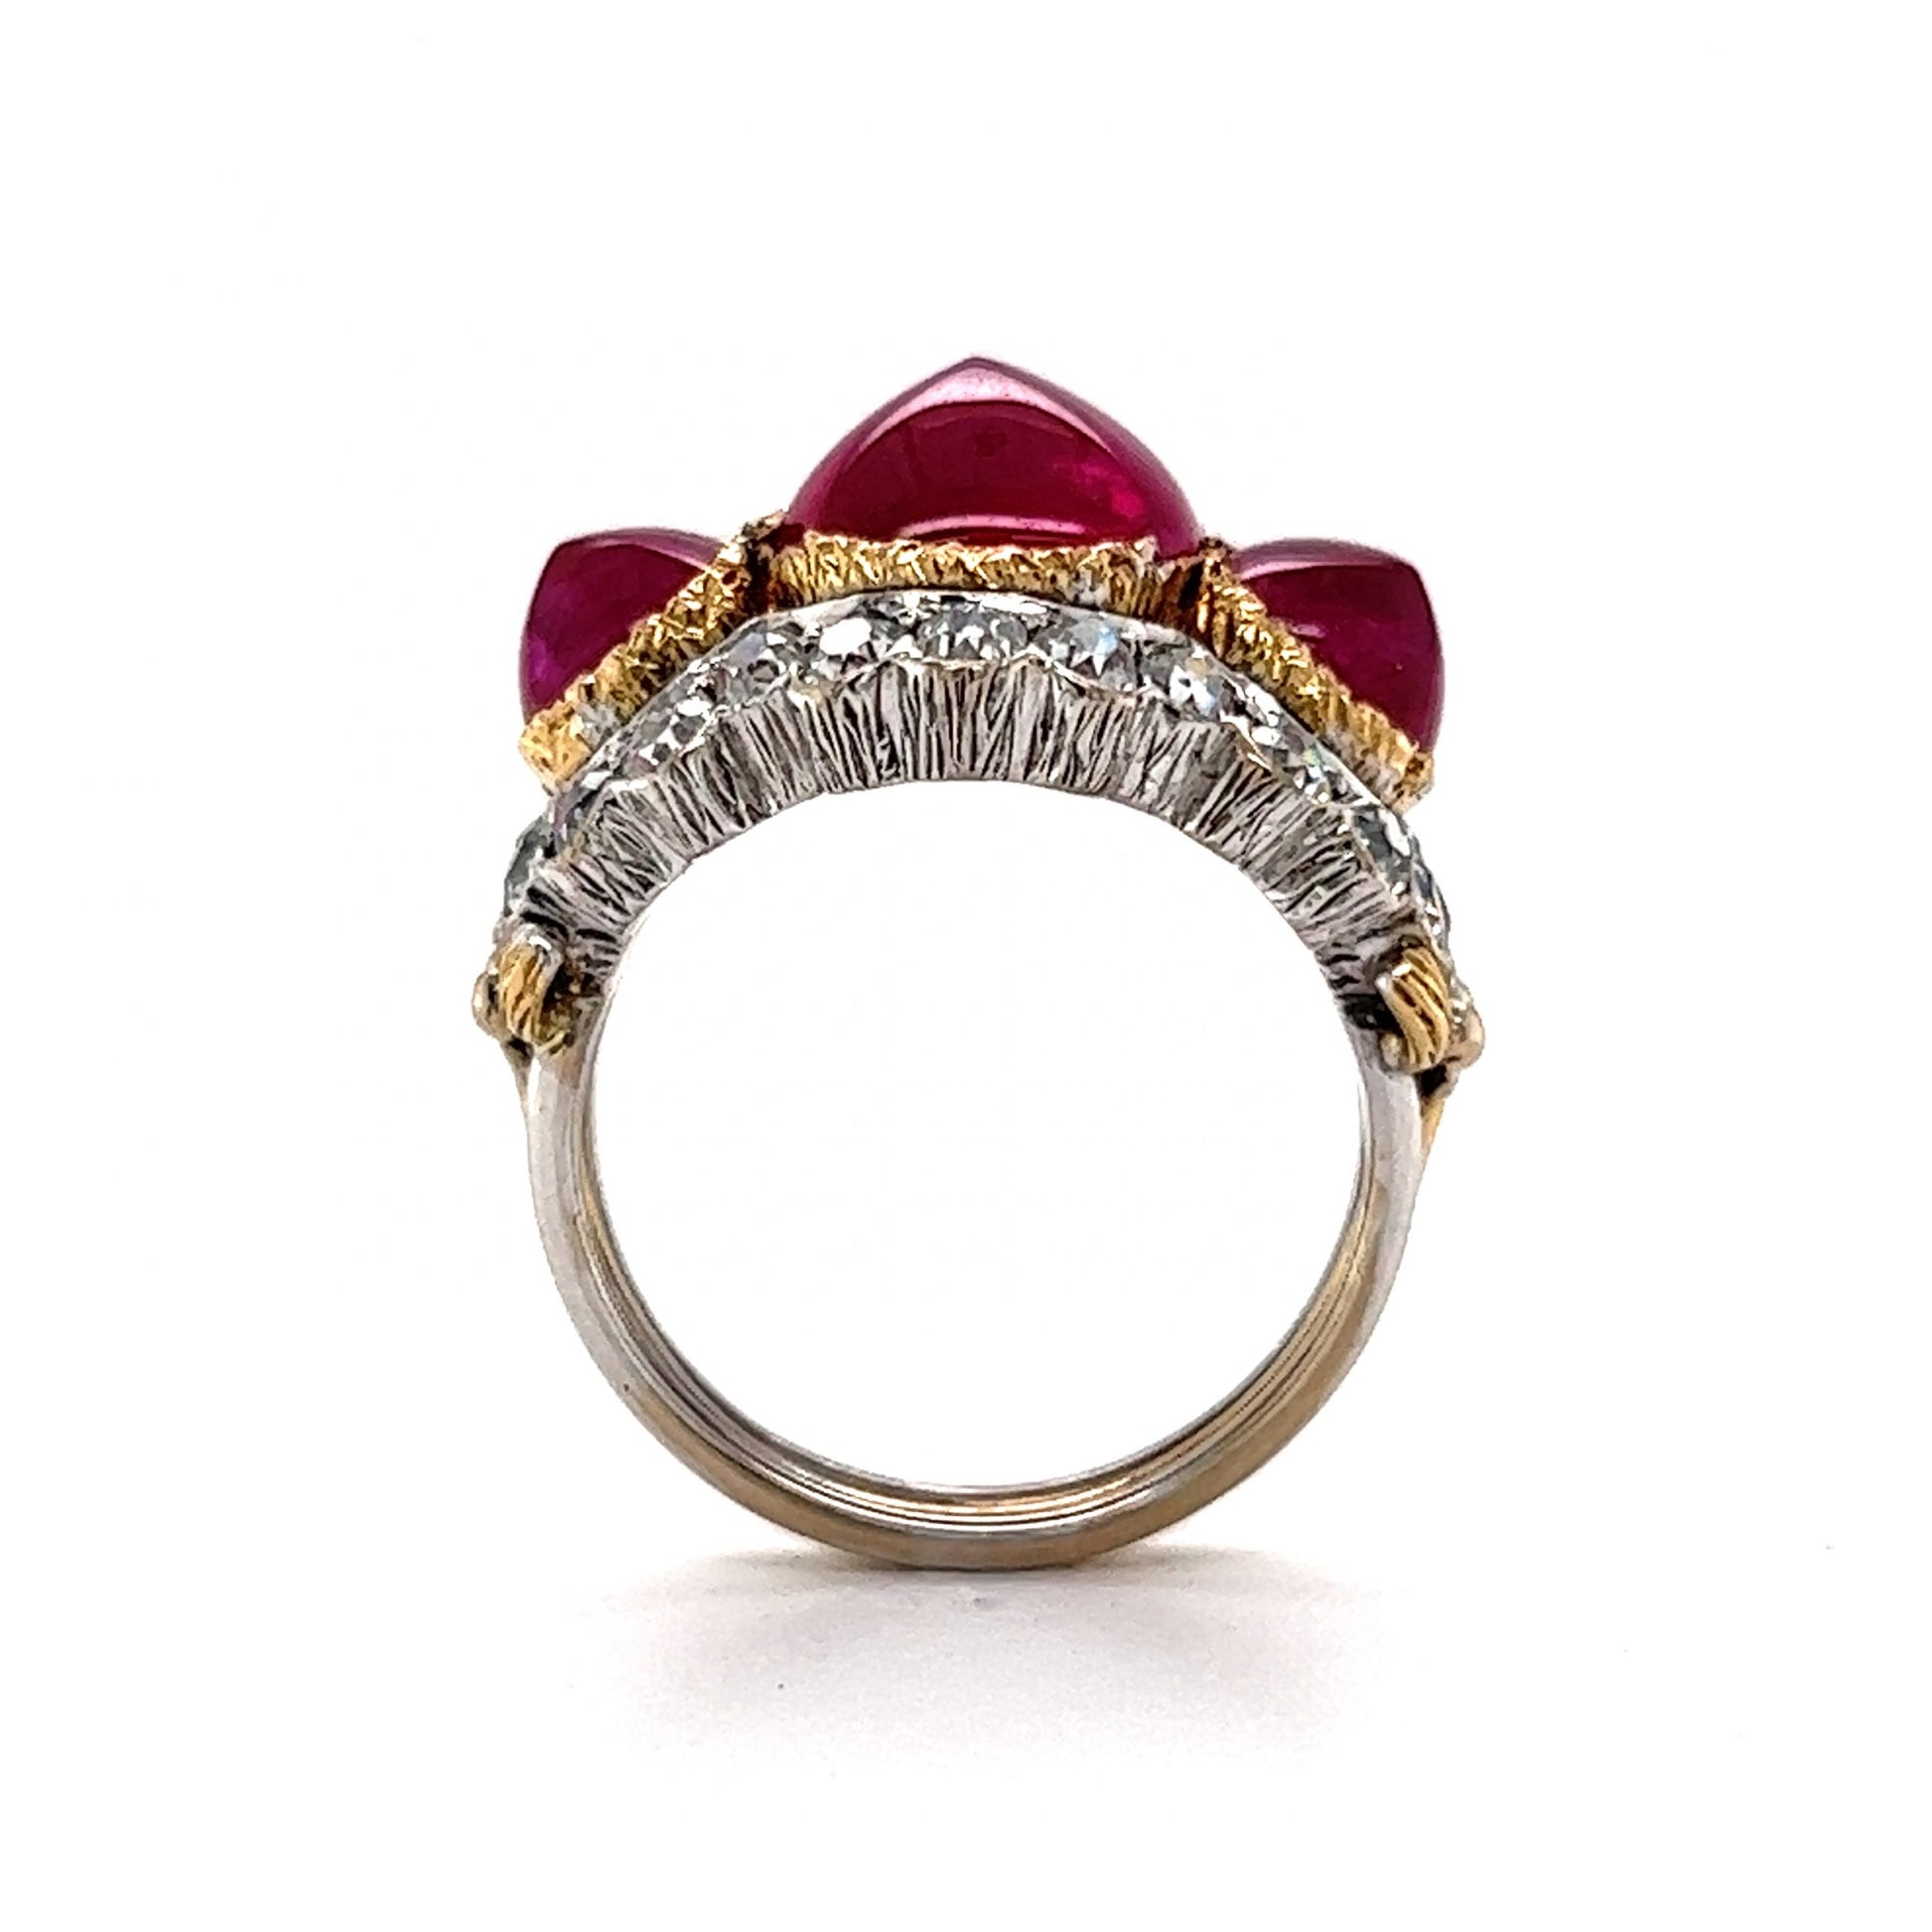 Cabochon Cut Ruby & Diamond Cocktail Ring 18k Gold